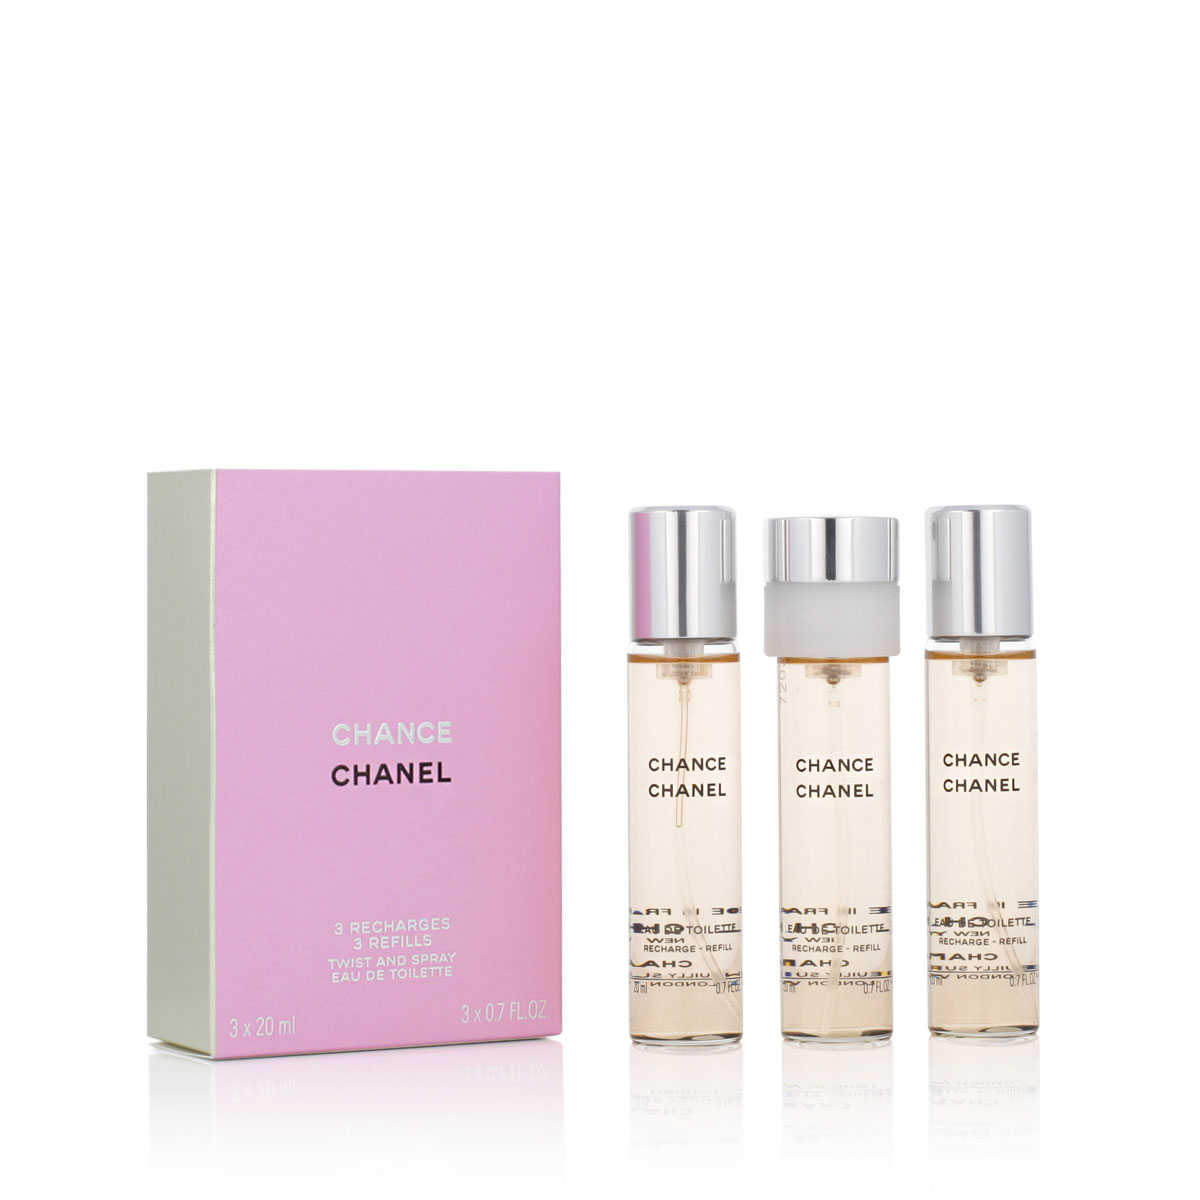 Chanel Chance Eau de Toilette 60ml Chanel Chance EDT Refill 2 x 20 ml + EDT Refill with spray 20 ml (woman) Kvepalai Moterims Rinkinys